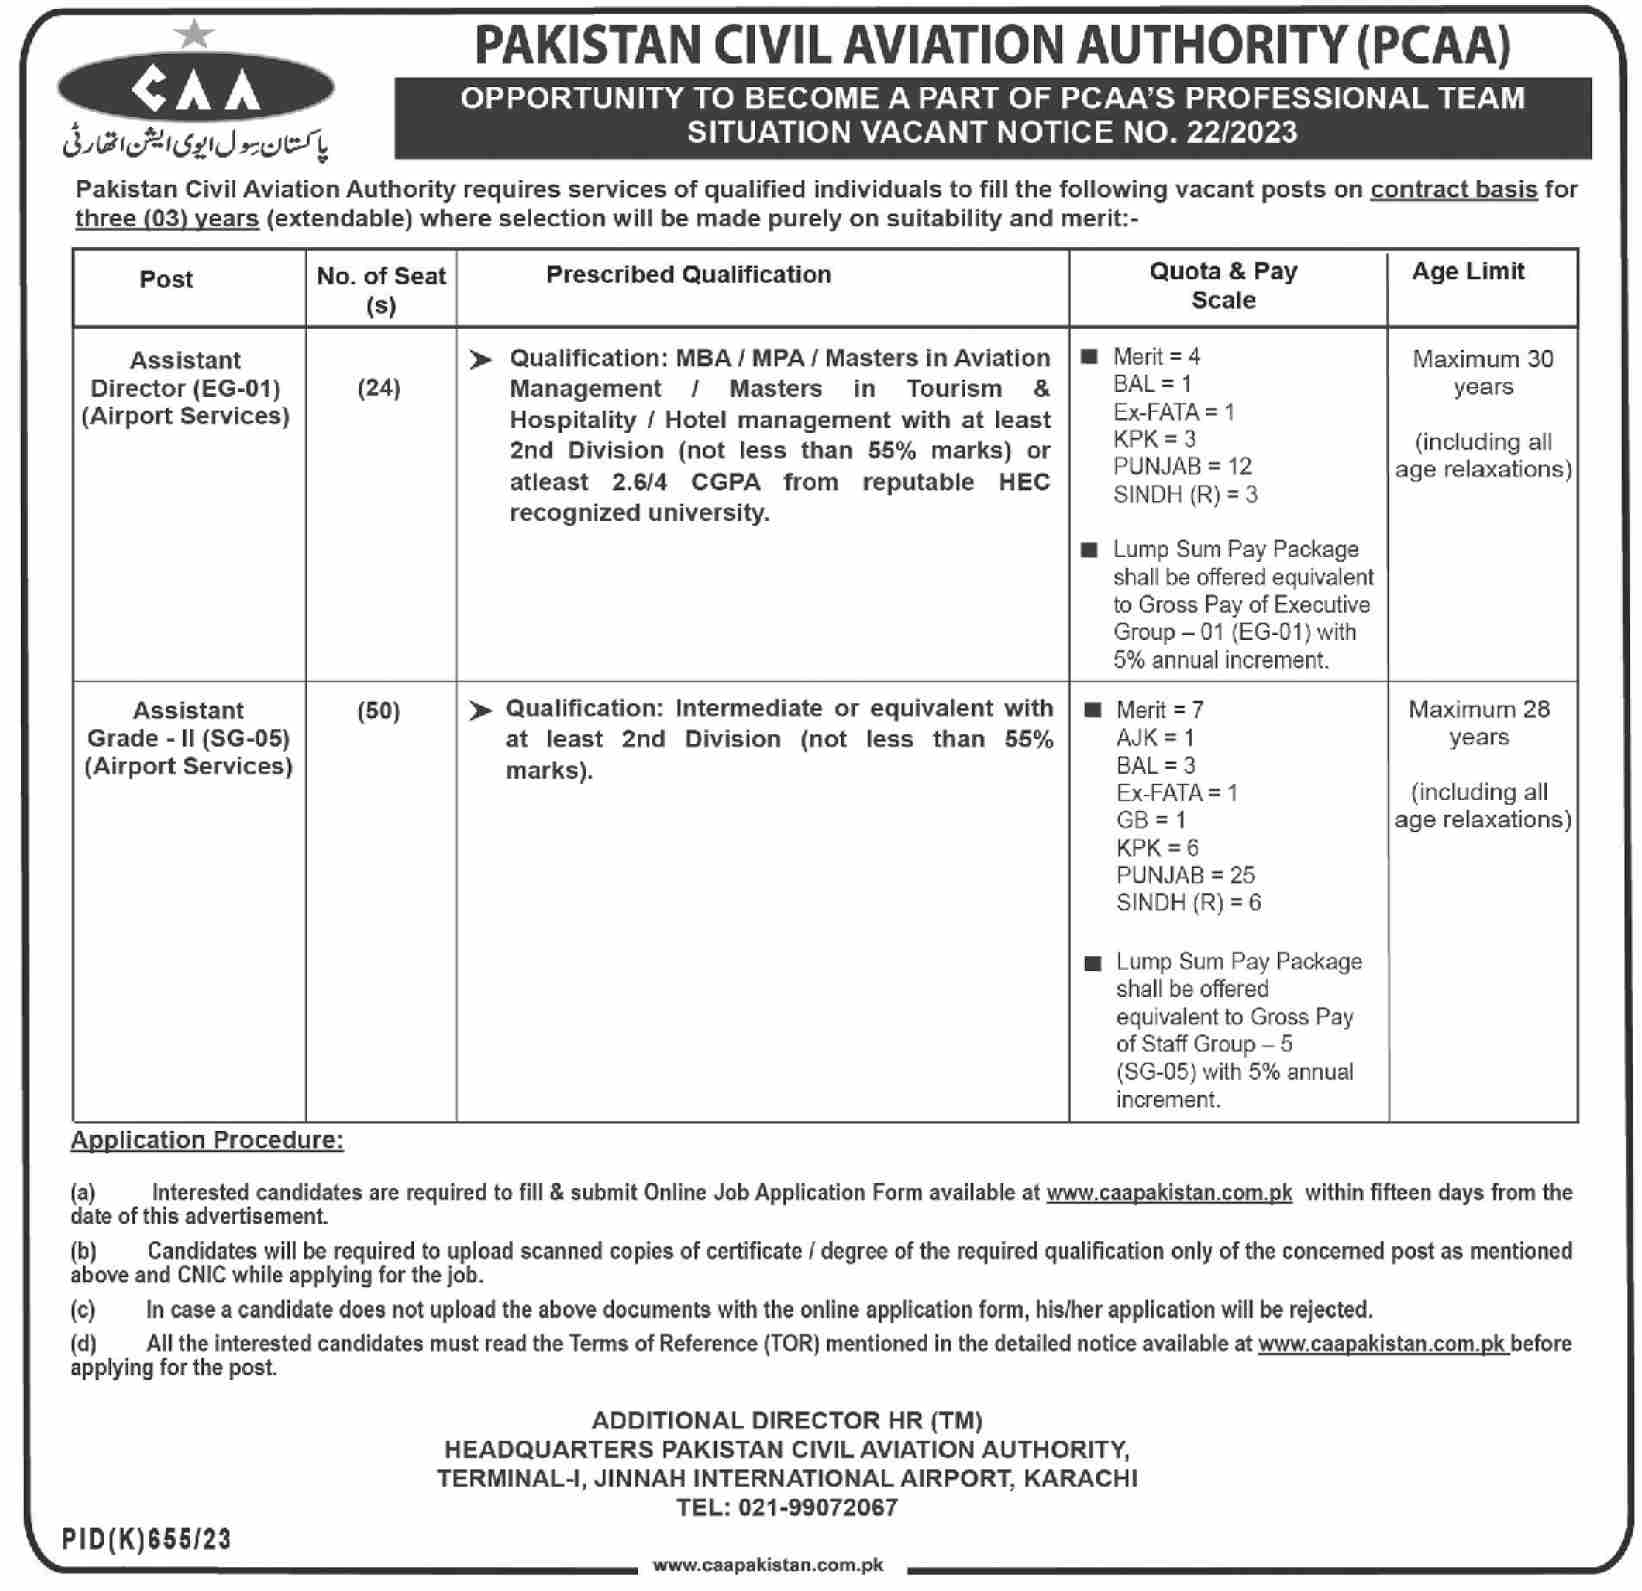 Pakistan Civil Aviation Authority Jobs September 2023 | Check Eligibility Criteria, Last Date & Total Posts